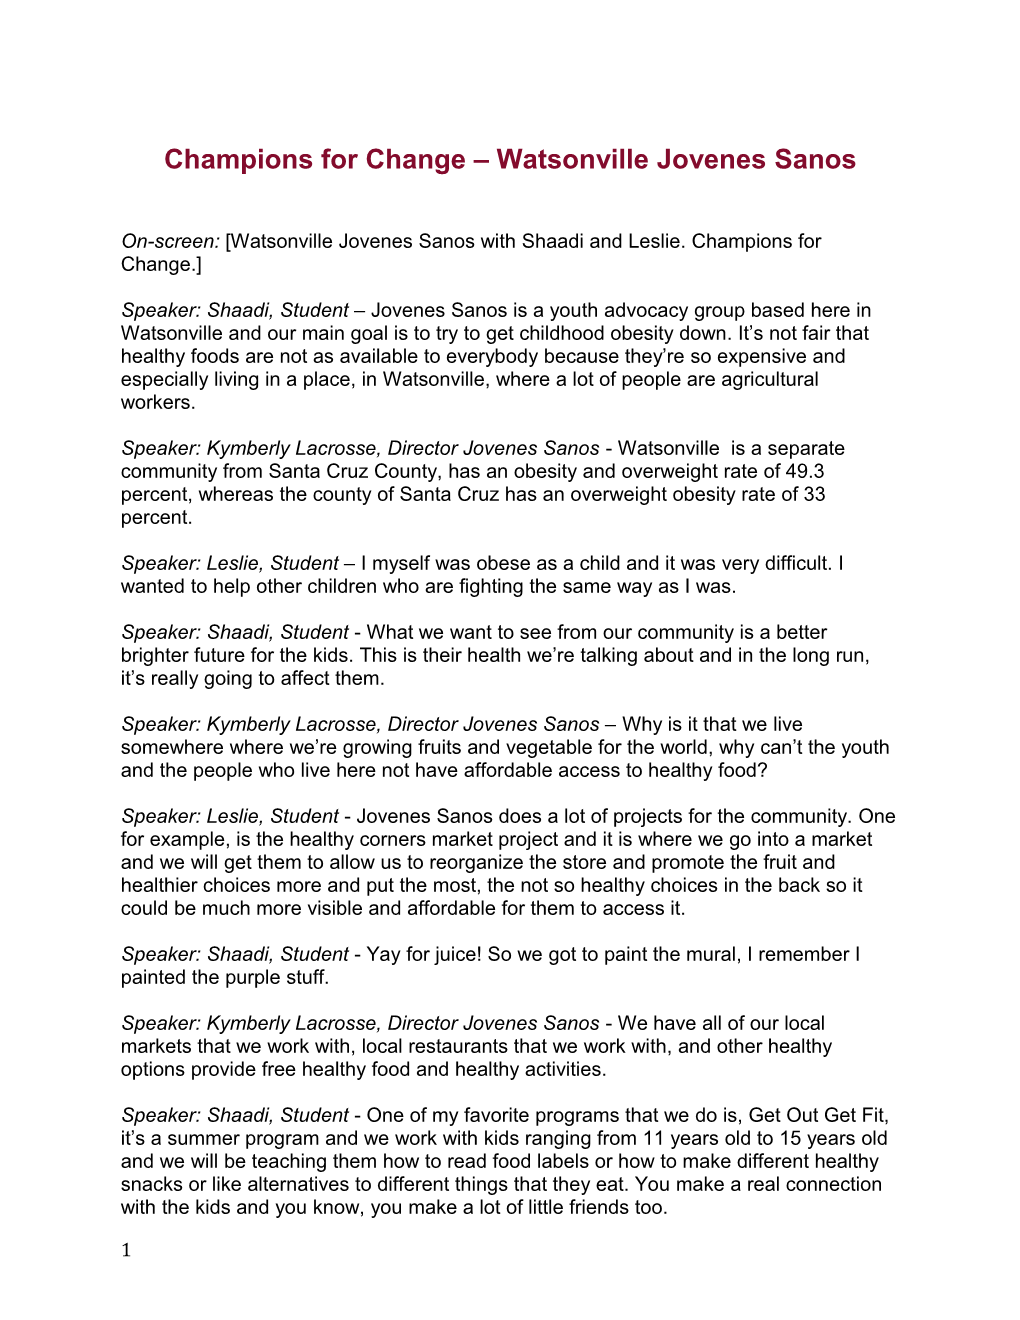 Champions Forchange Watsonvillejovenes Sanos